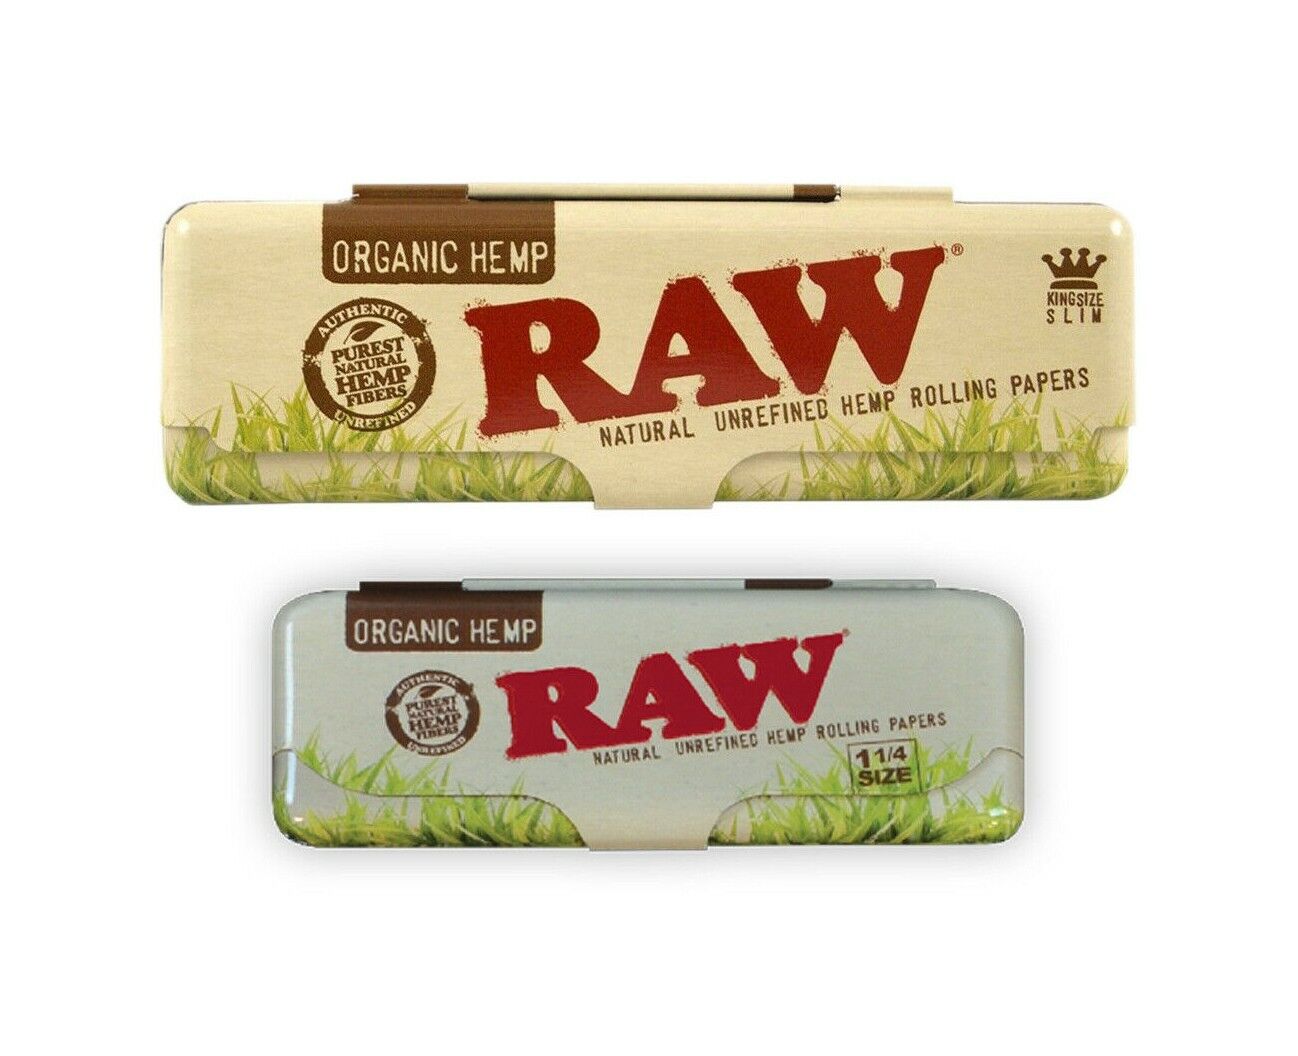 Both RAW Organic Hemp Metal Paper Case King Size and 1 1/4 size